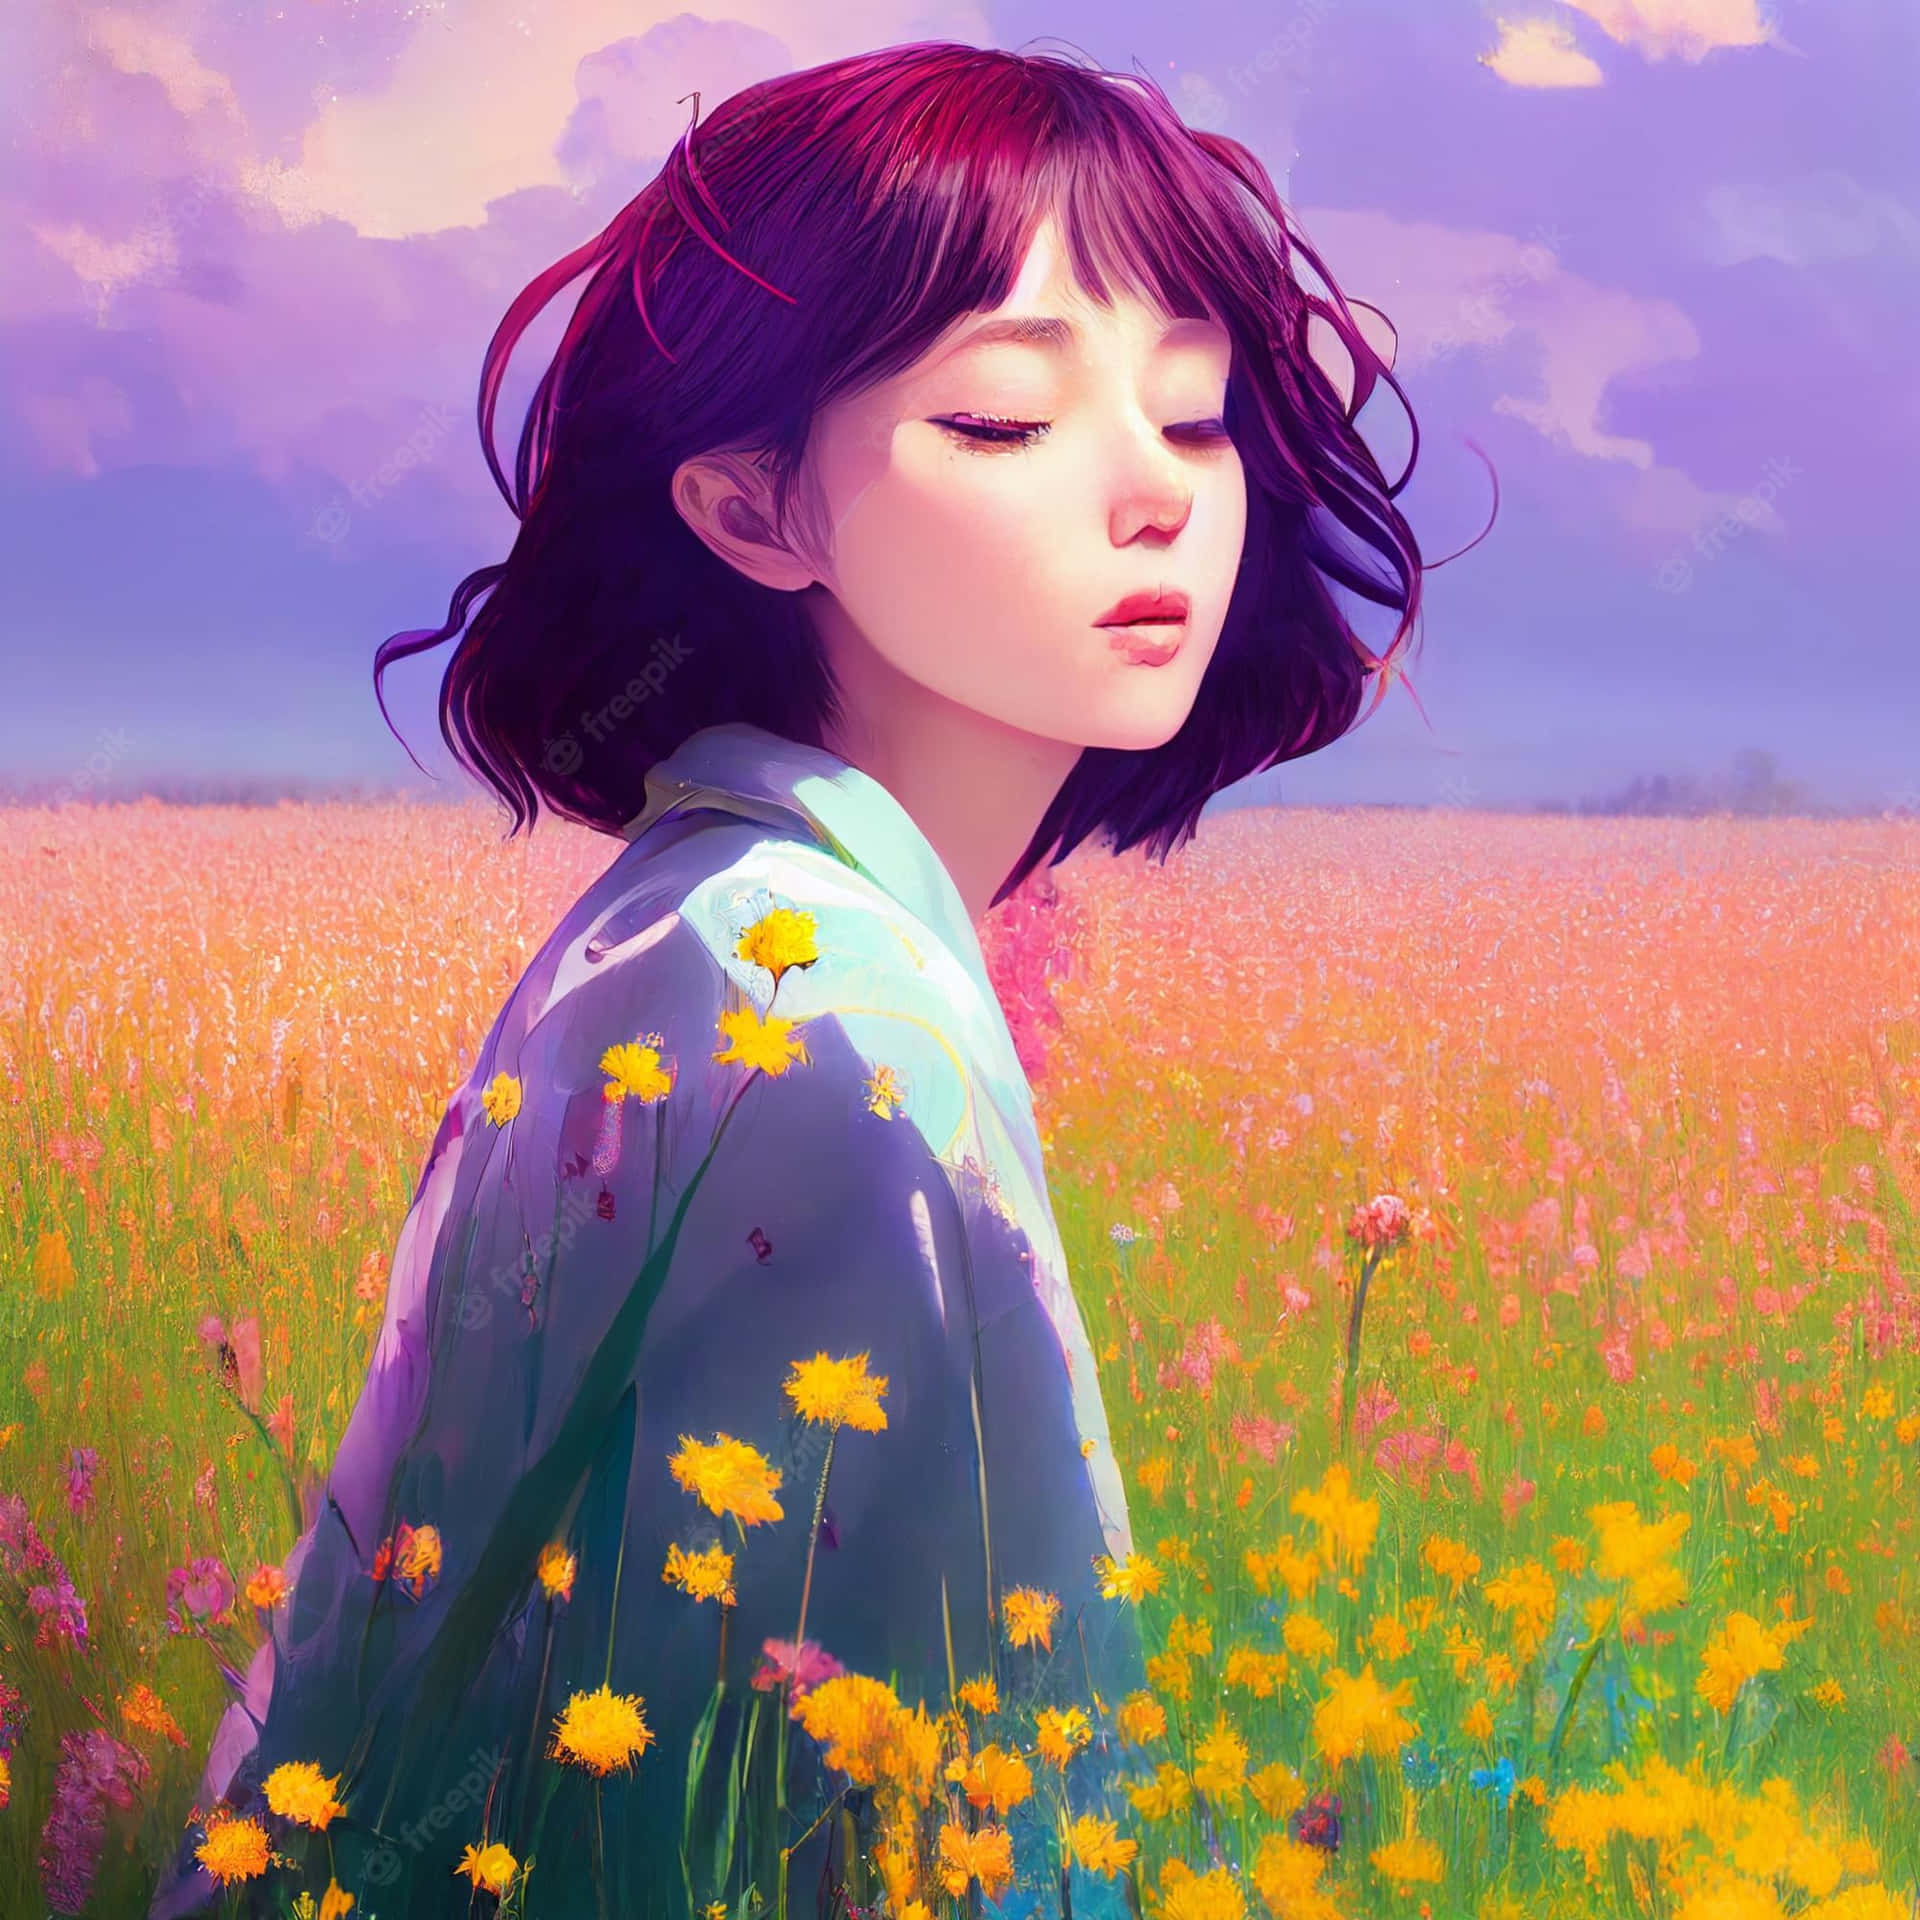 Download Korean Anime Girl On A Field Of Flowers Wallpaper